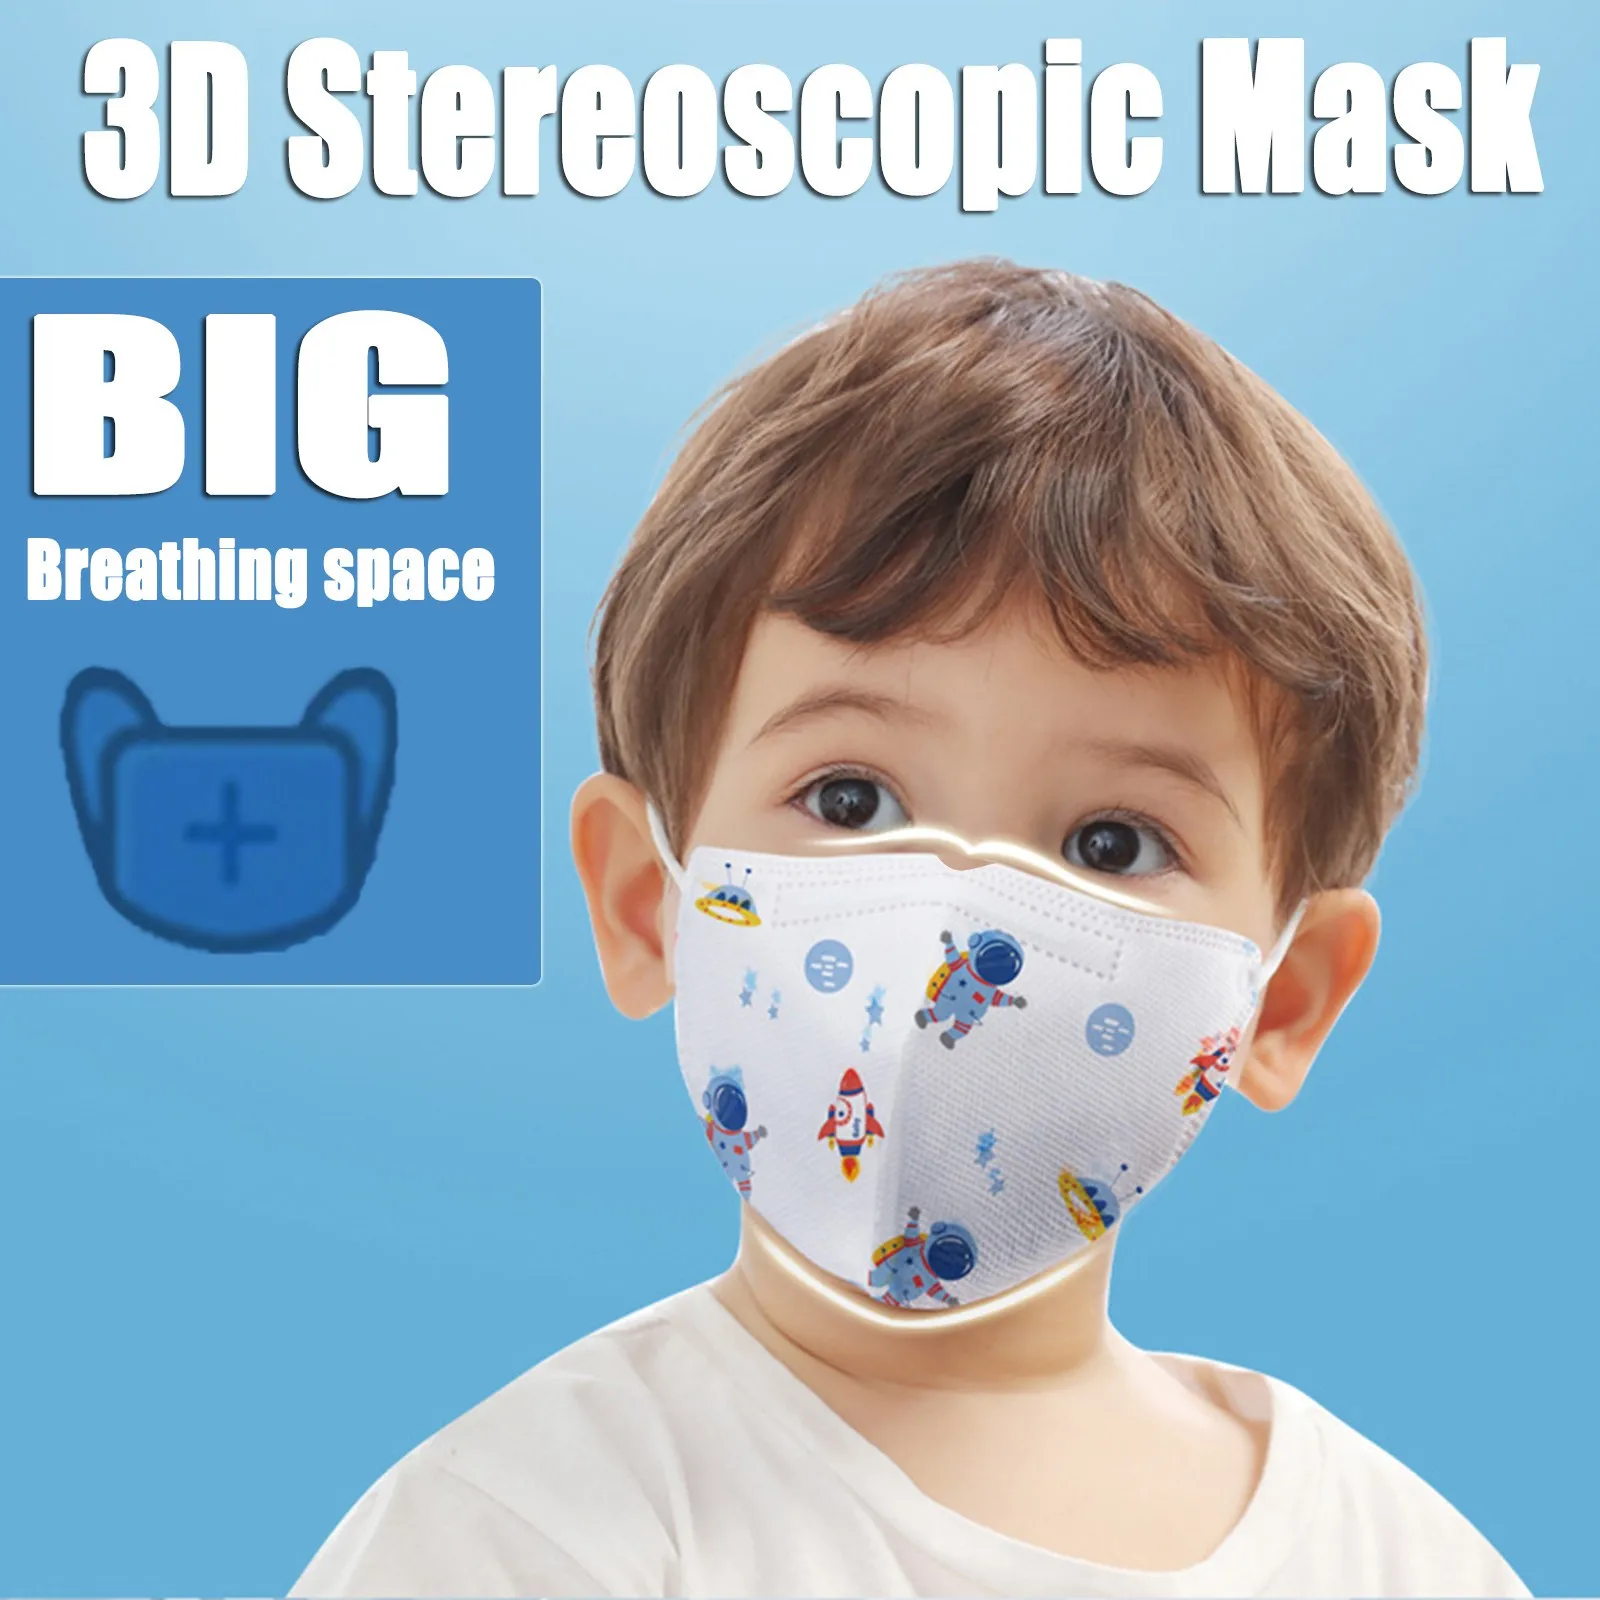 10-500pcs Masque Enfant Mascarillas Ninos Kids Baby Disposable Face Mask Cute Cartoon 4ply Ear Loop Facemasks Halloween Cosplay